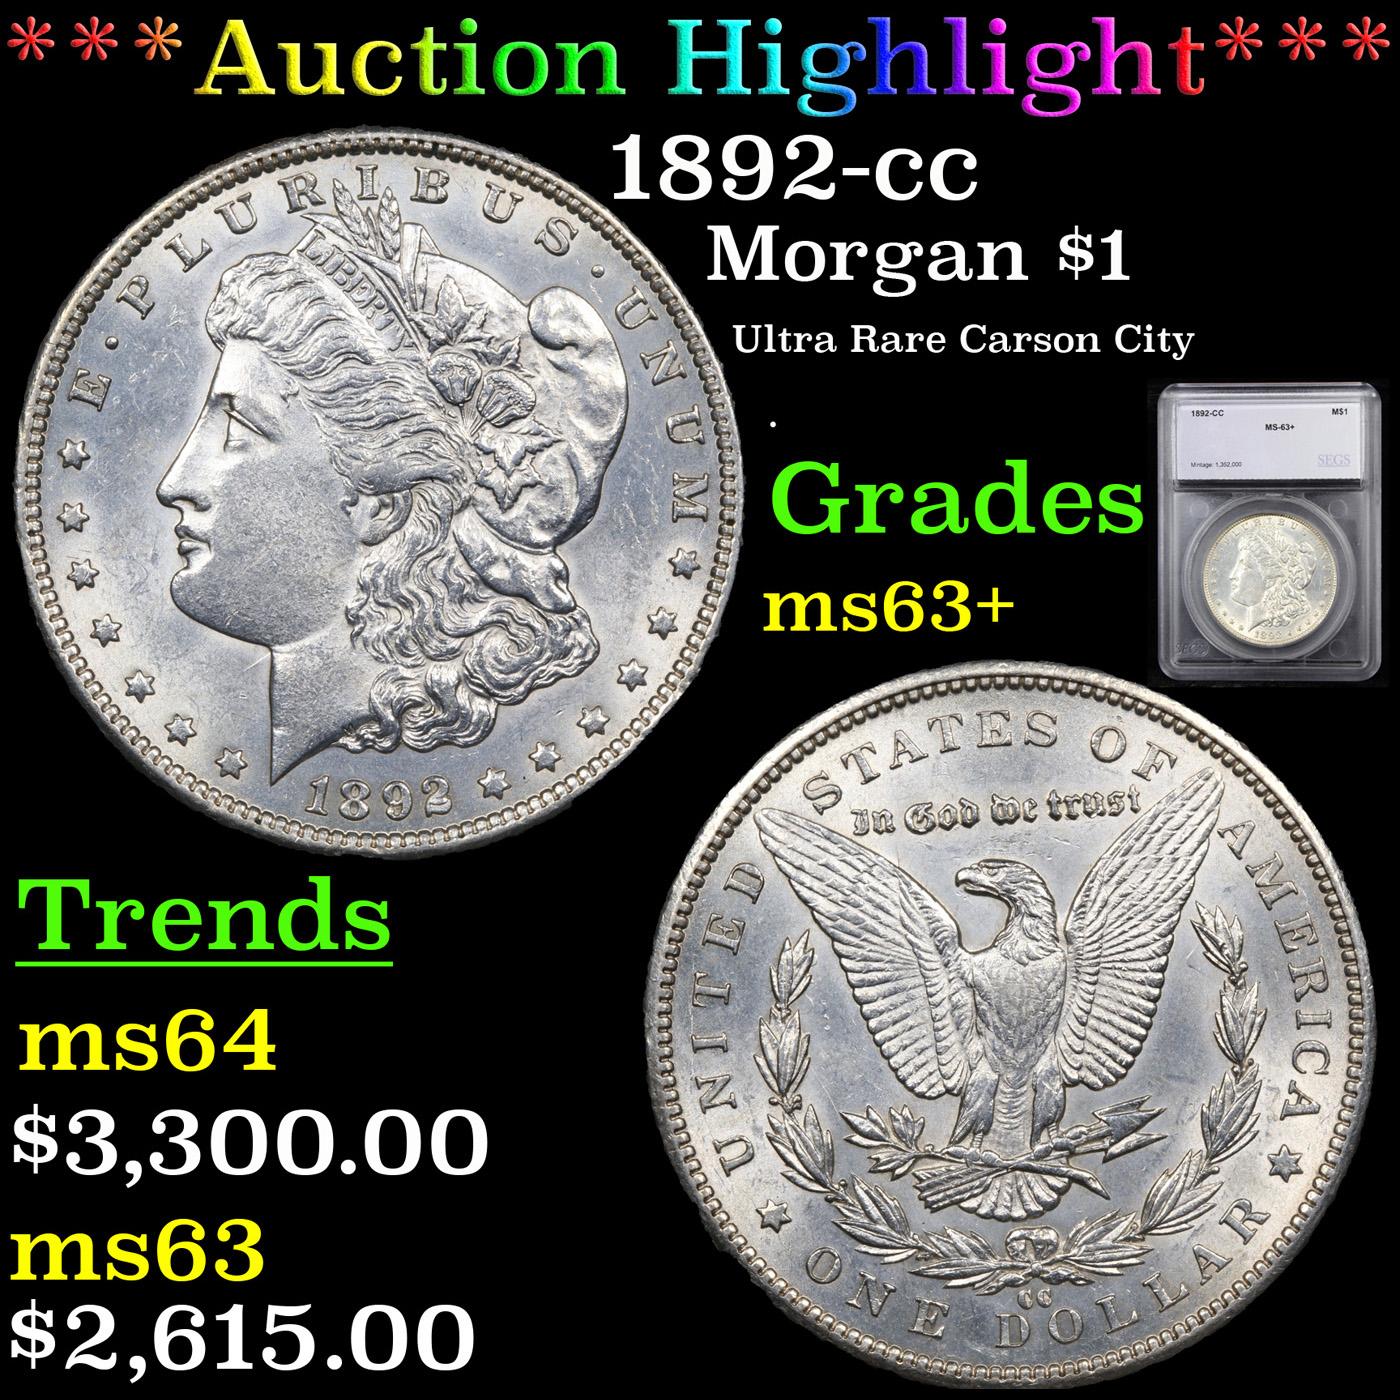 ***Auction Highlight*** 1892-cc Morgan Dollar $1 Graded ms63+ By SEGS (fc)